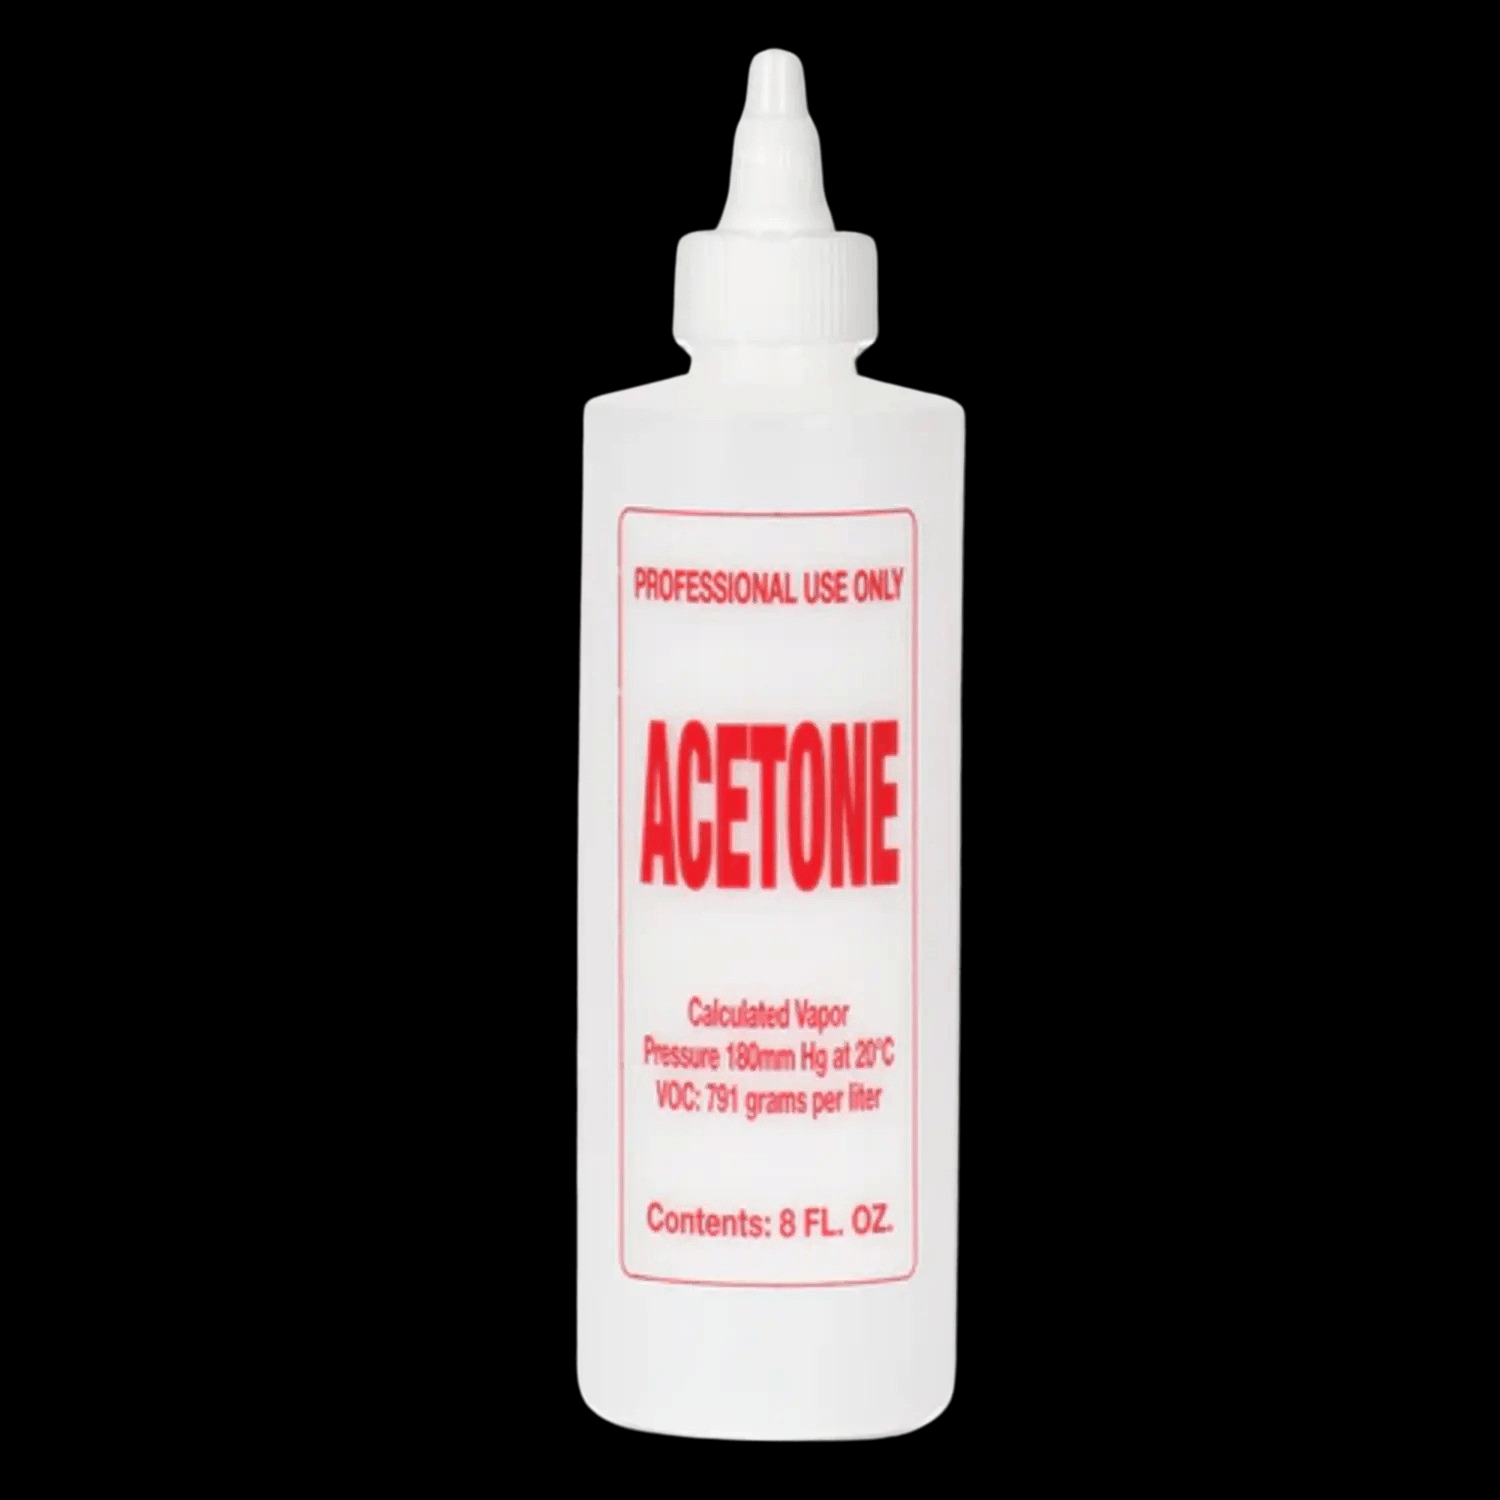 Adding Acetone to EMA Monomer